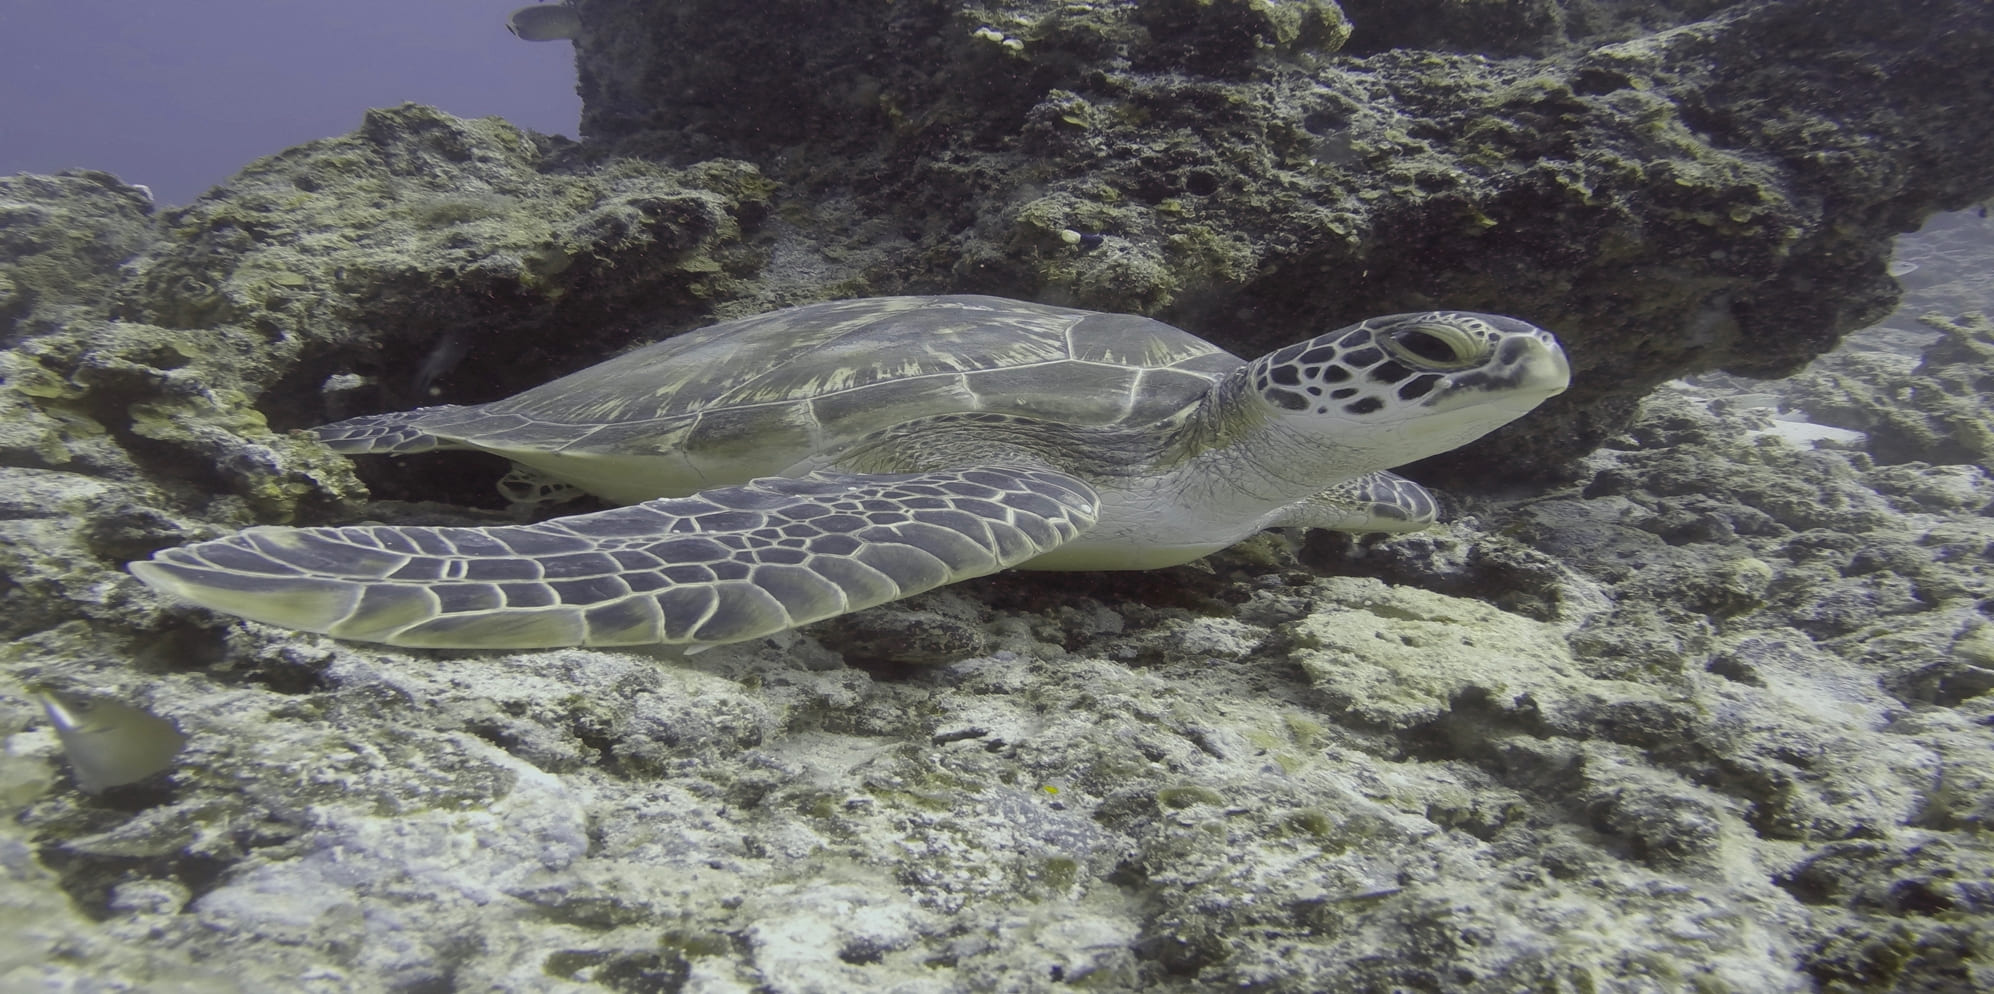 Proteja as tartarugas marinhas no sul da Tanzânia